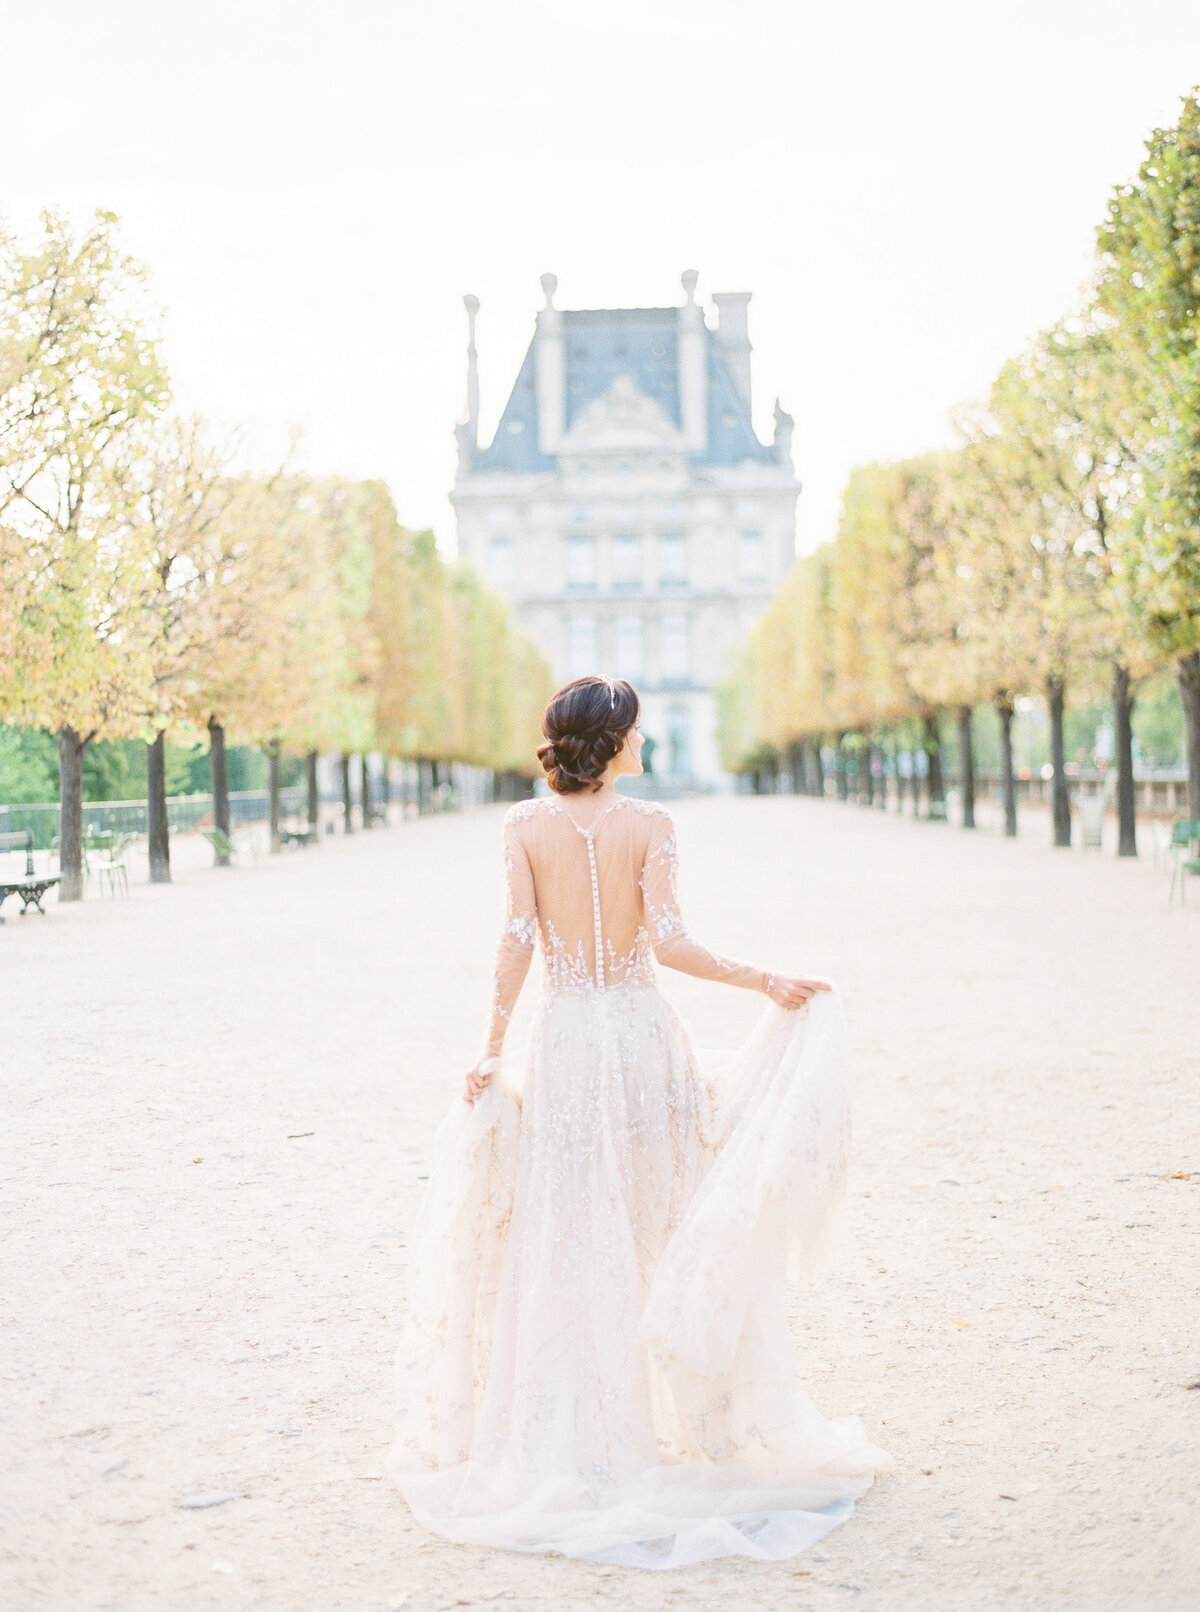 RachelOwensPhotography-ParisWeddingInspiration-127